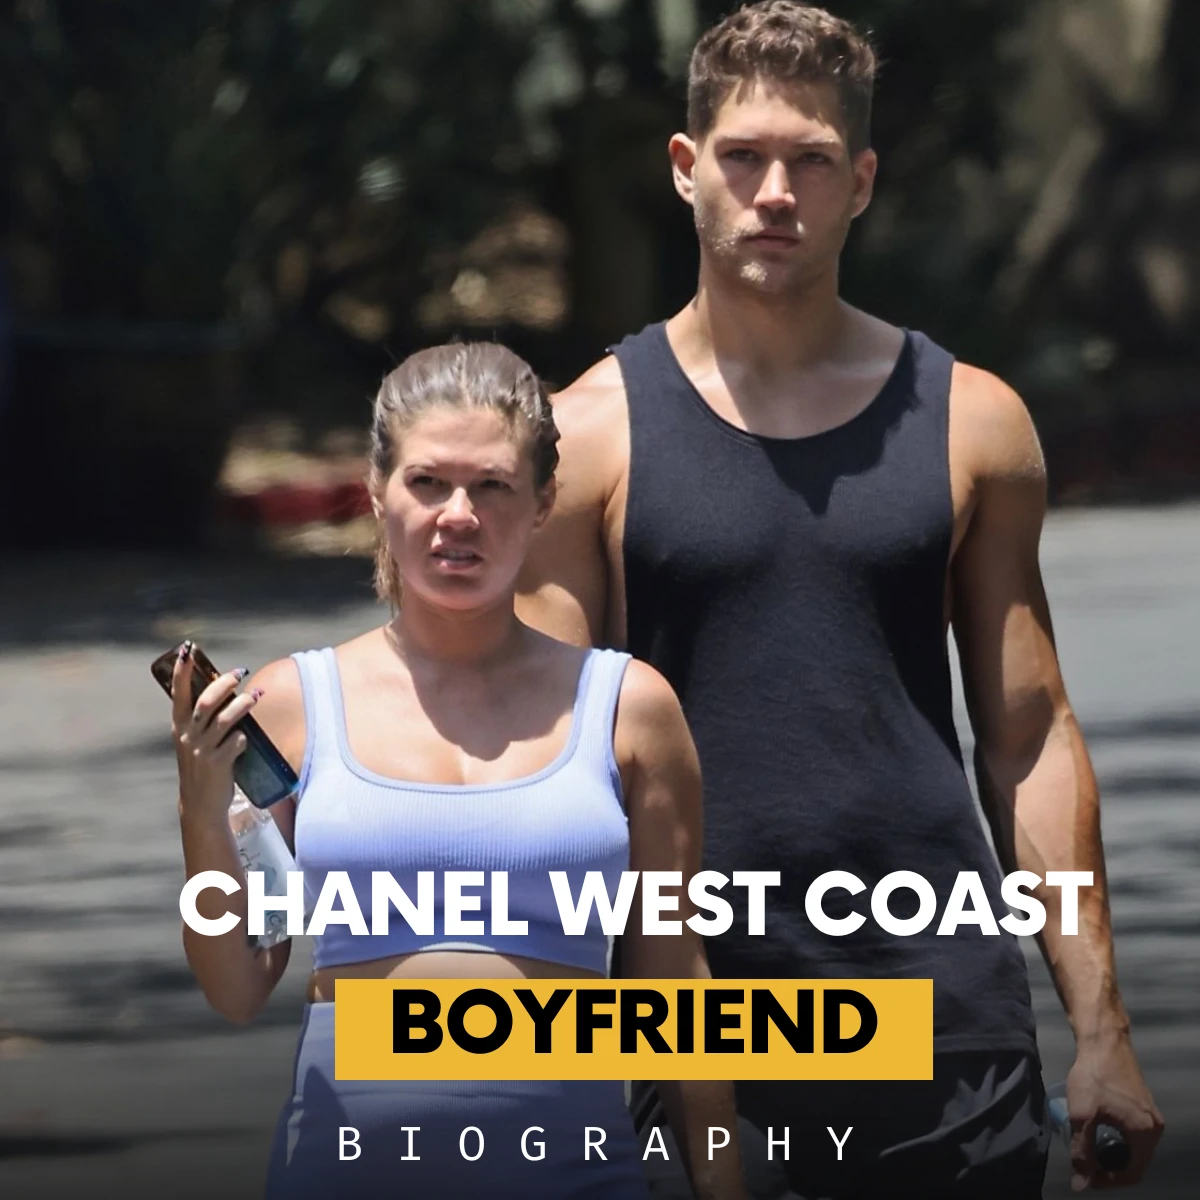 Chanel west coast with her boyfriend Dom Fenison